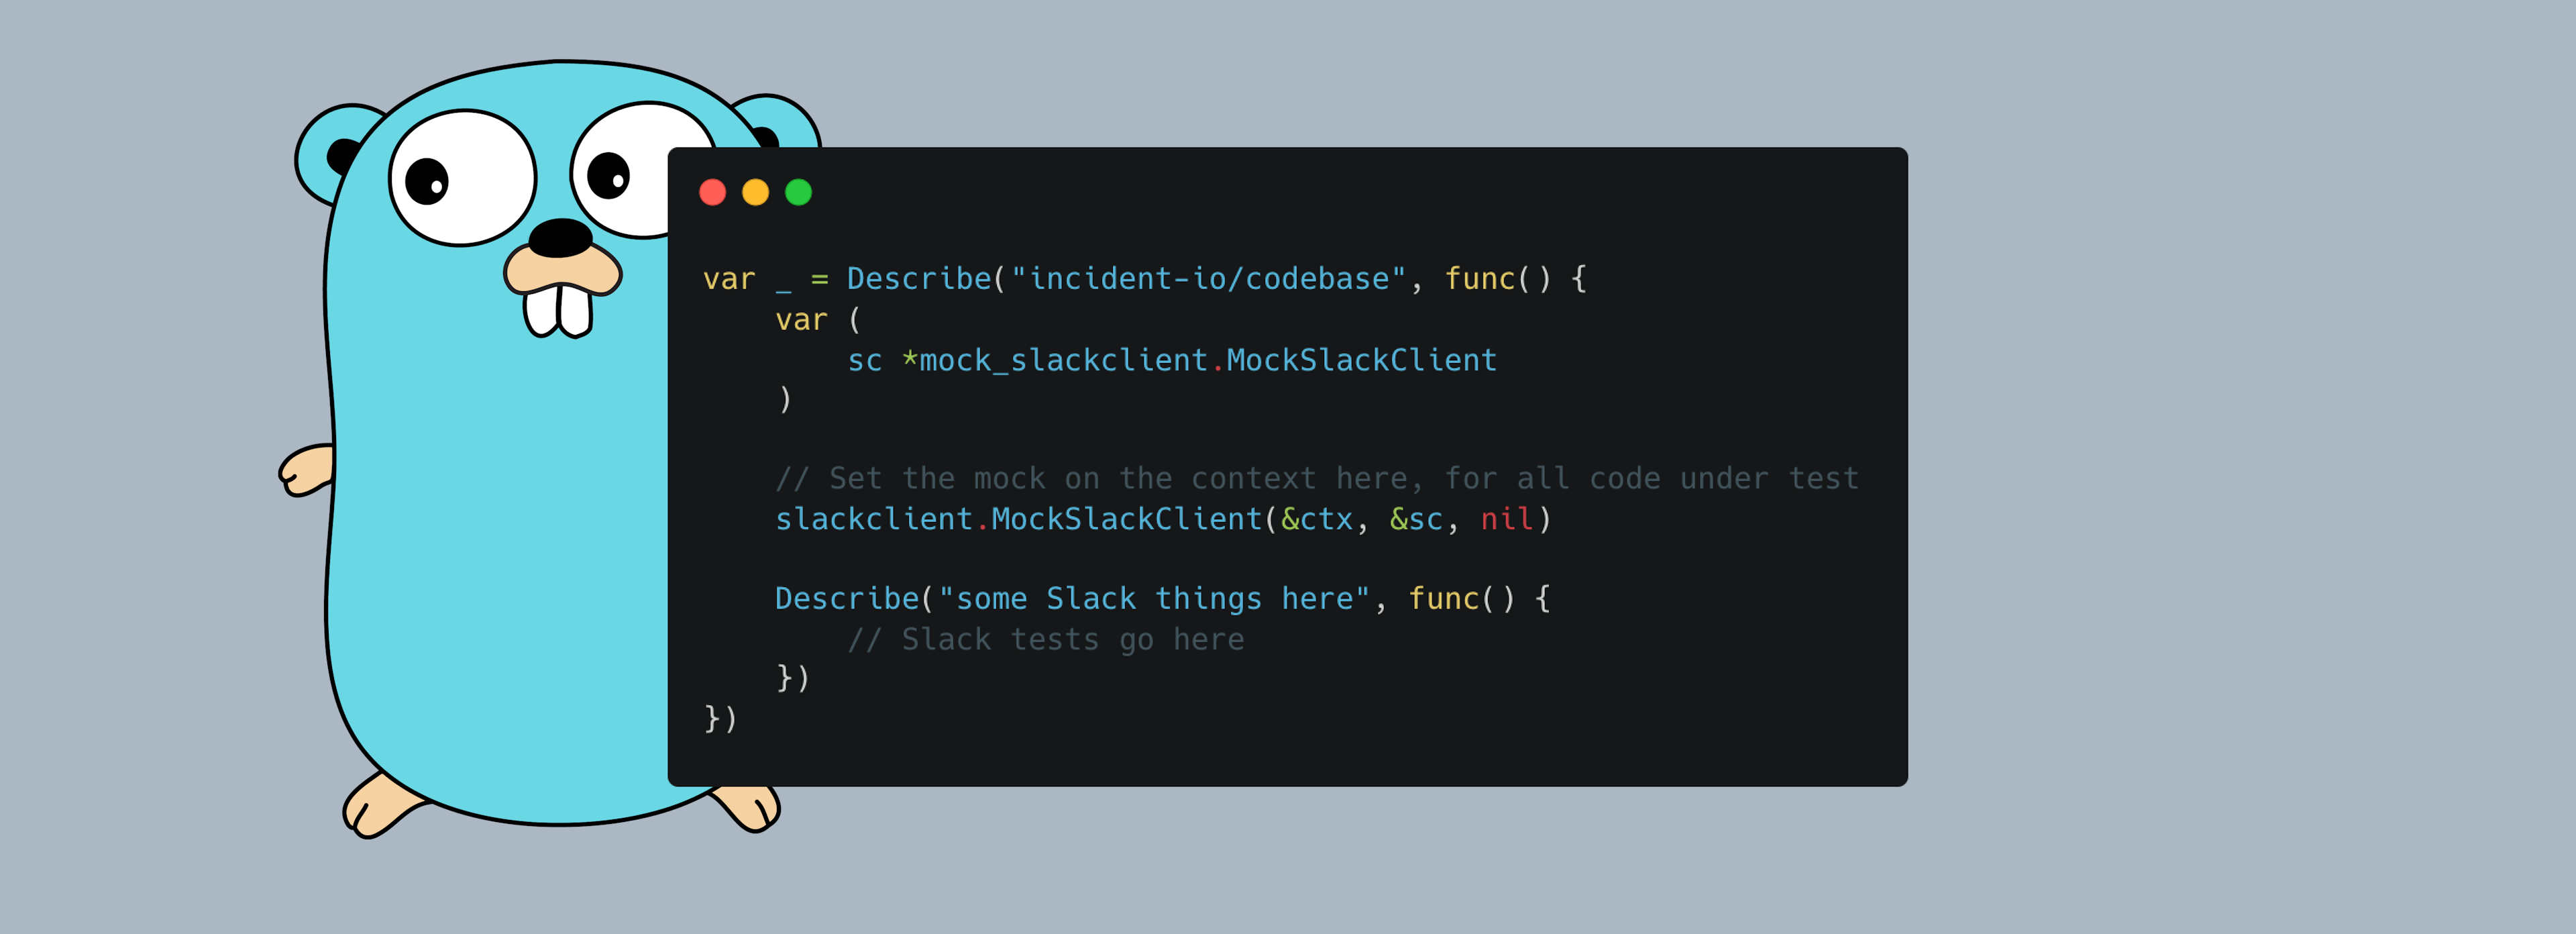 Golang tests using the mocked Slack client